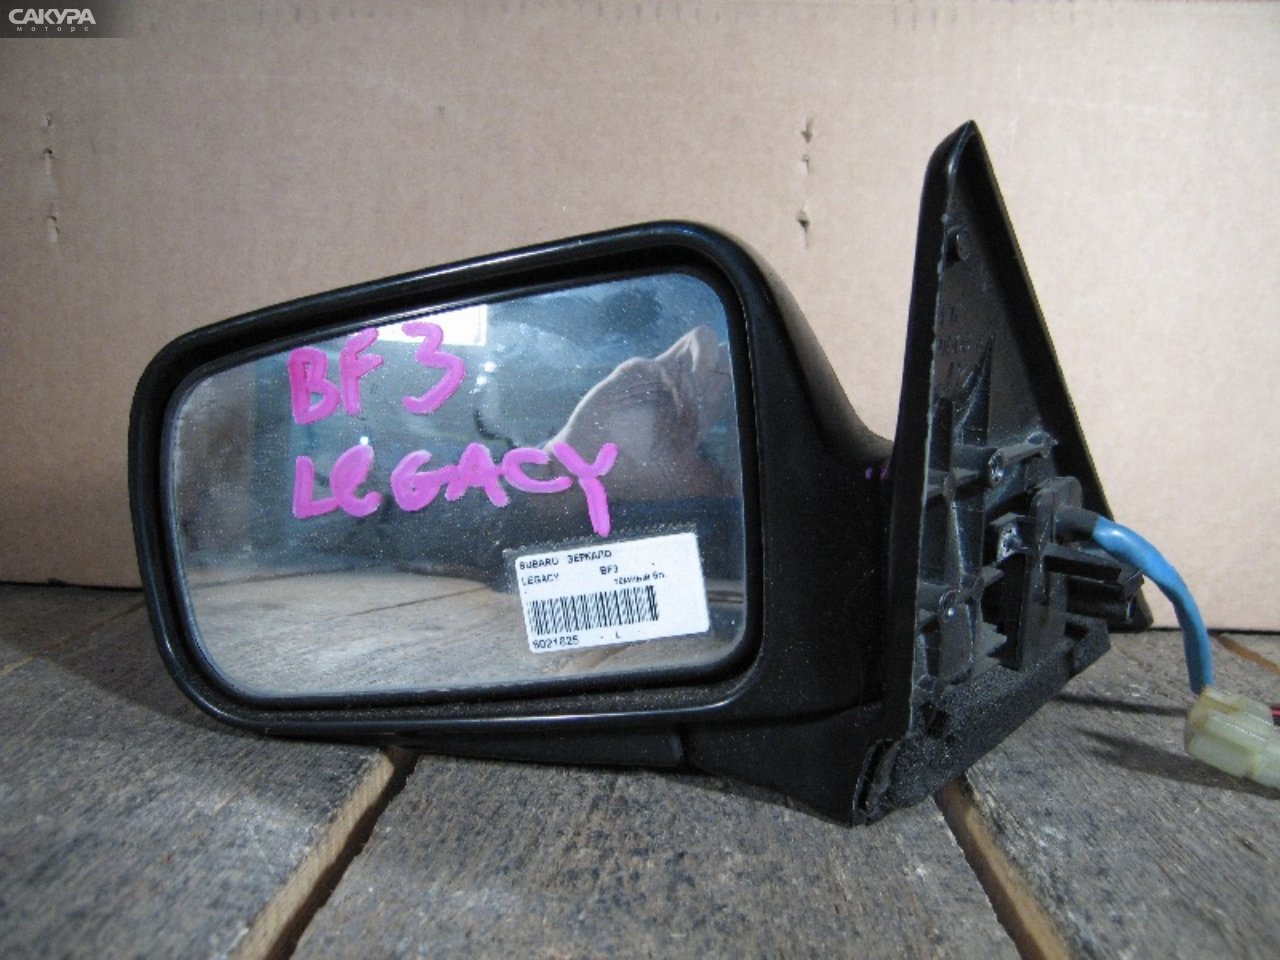 Зеркало боковое левое Subaru Legacy BF3: купить в Сакура Абакан.